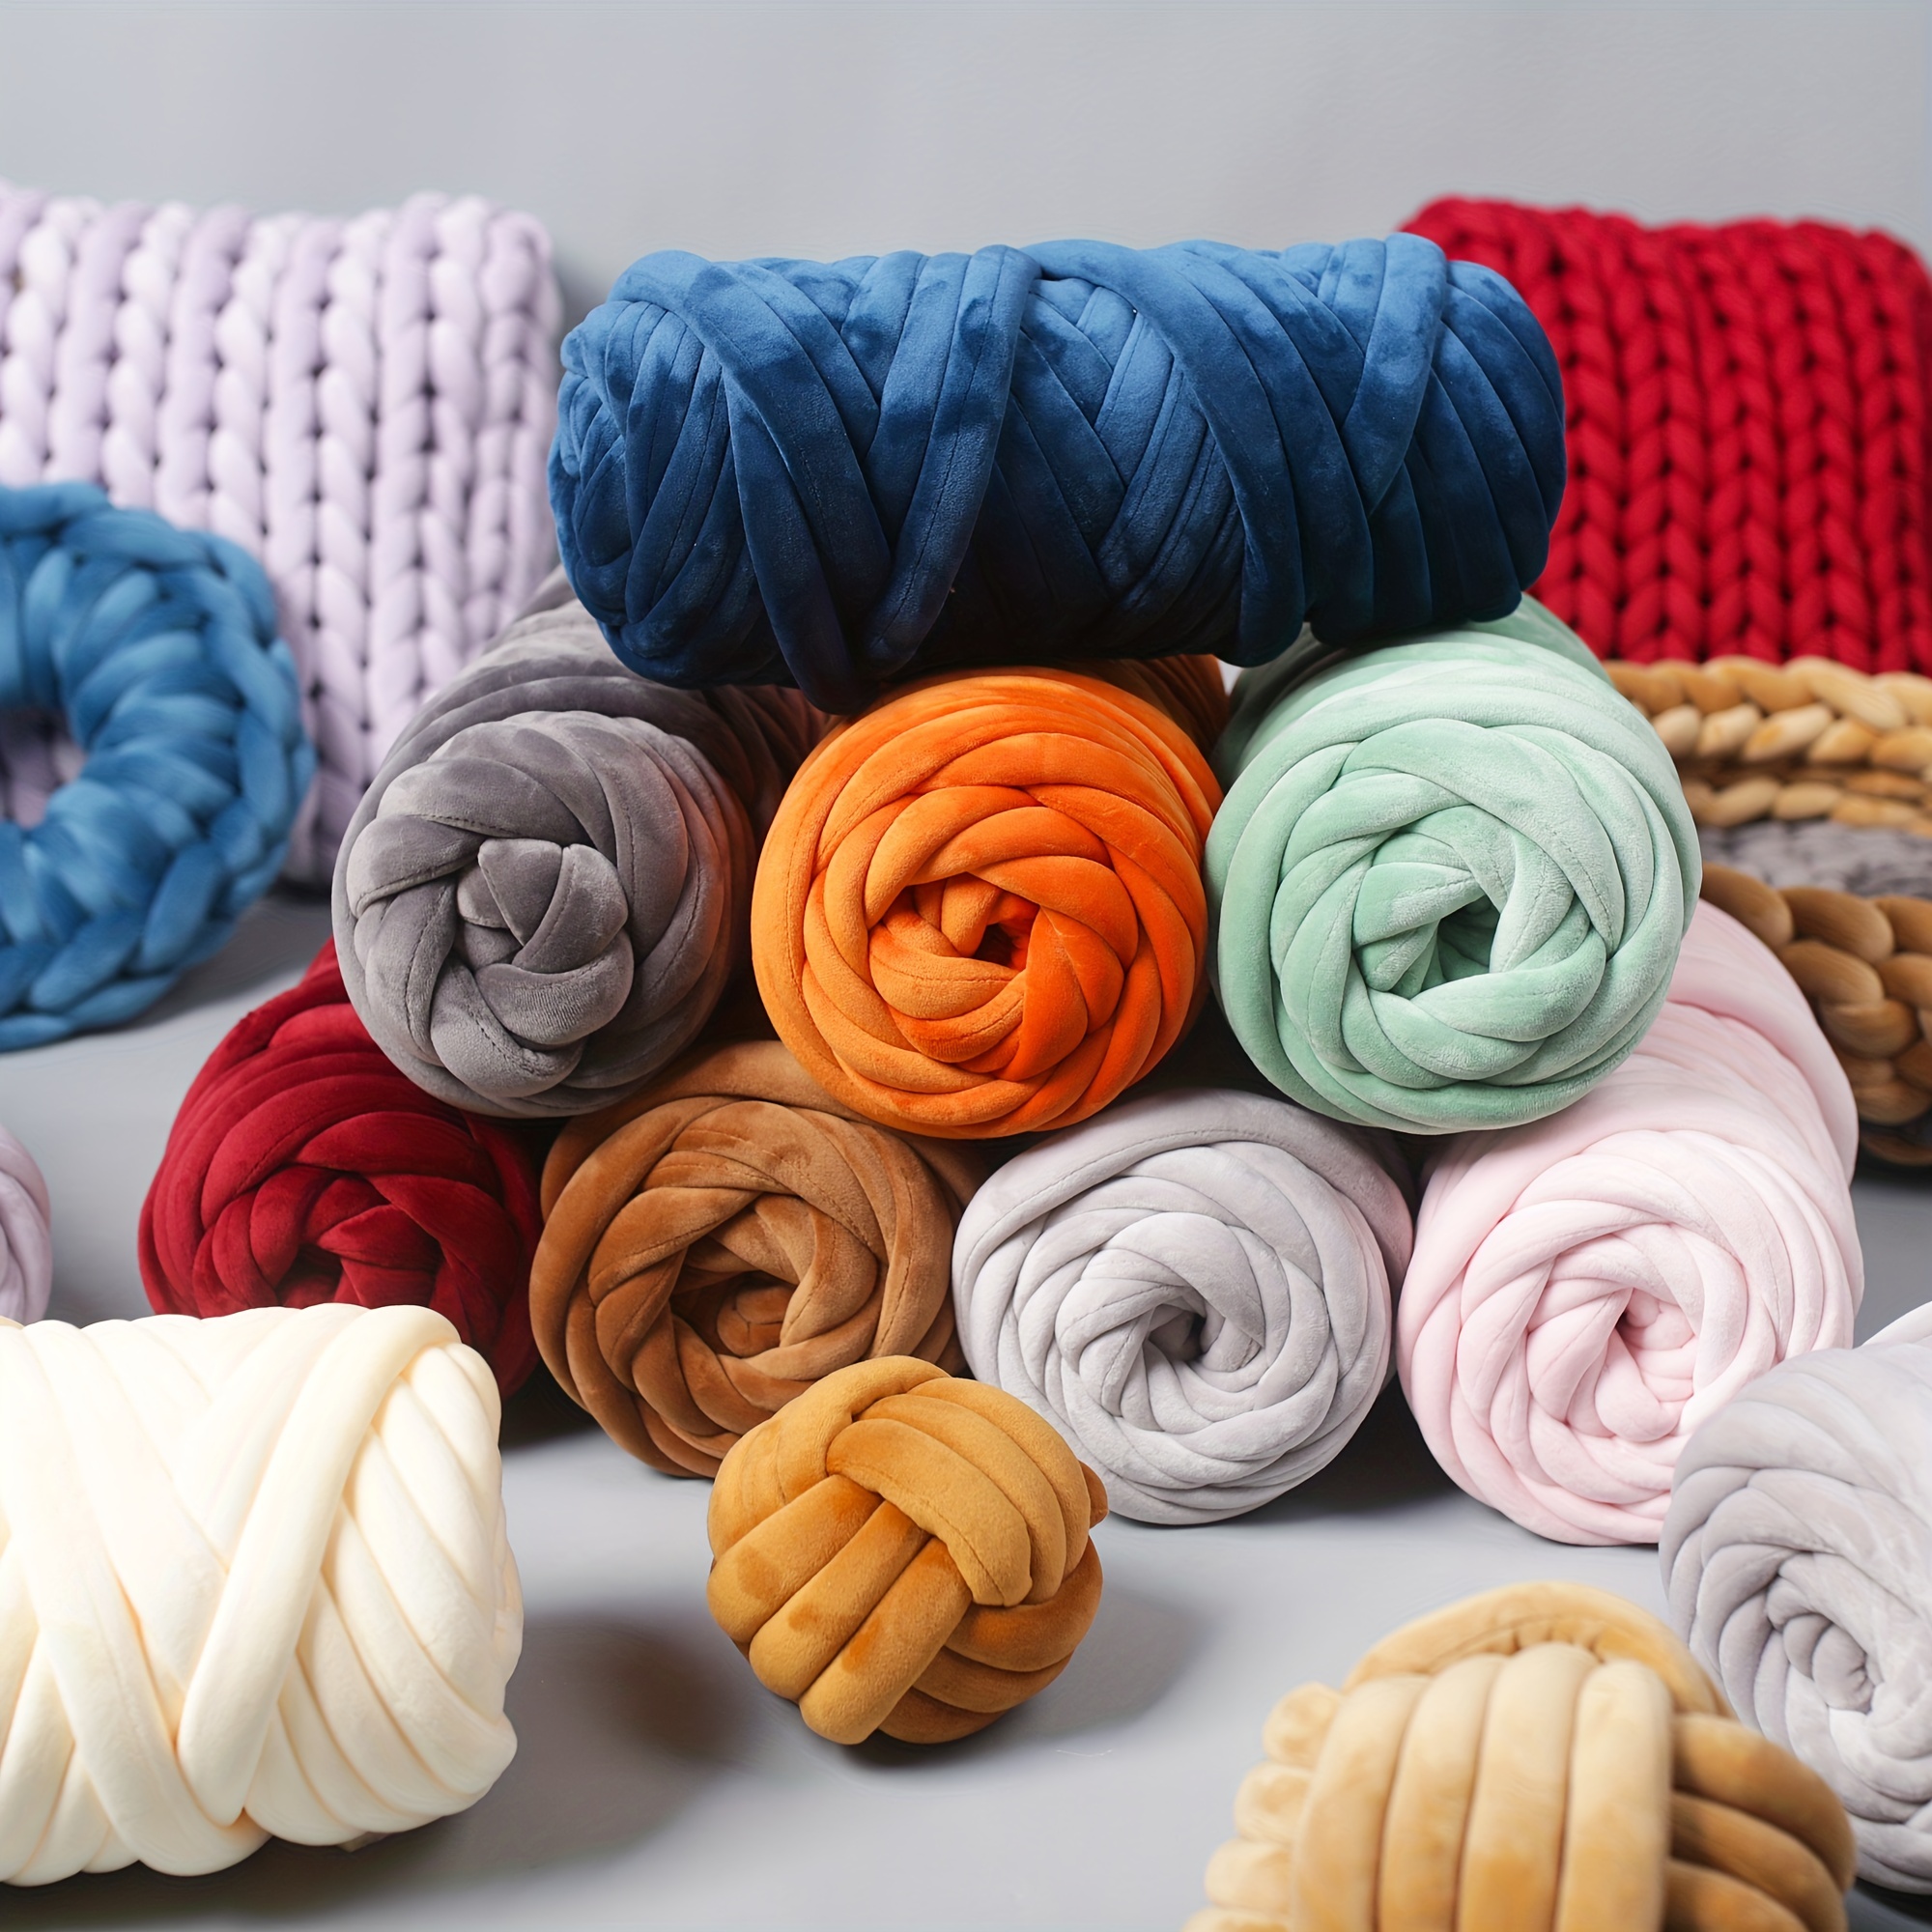 Velvet Chunky Yarn Bulky Giant Arm Knitting Yarn, Super Soft Jumbo Tube Weight Yarn, Fluffy DIY Crochet Hand Making Washable Yarn for Blanket, Pet